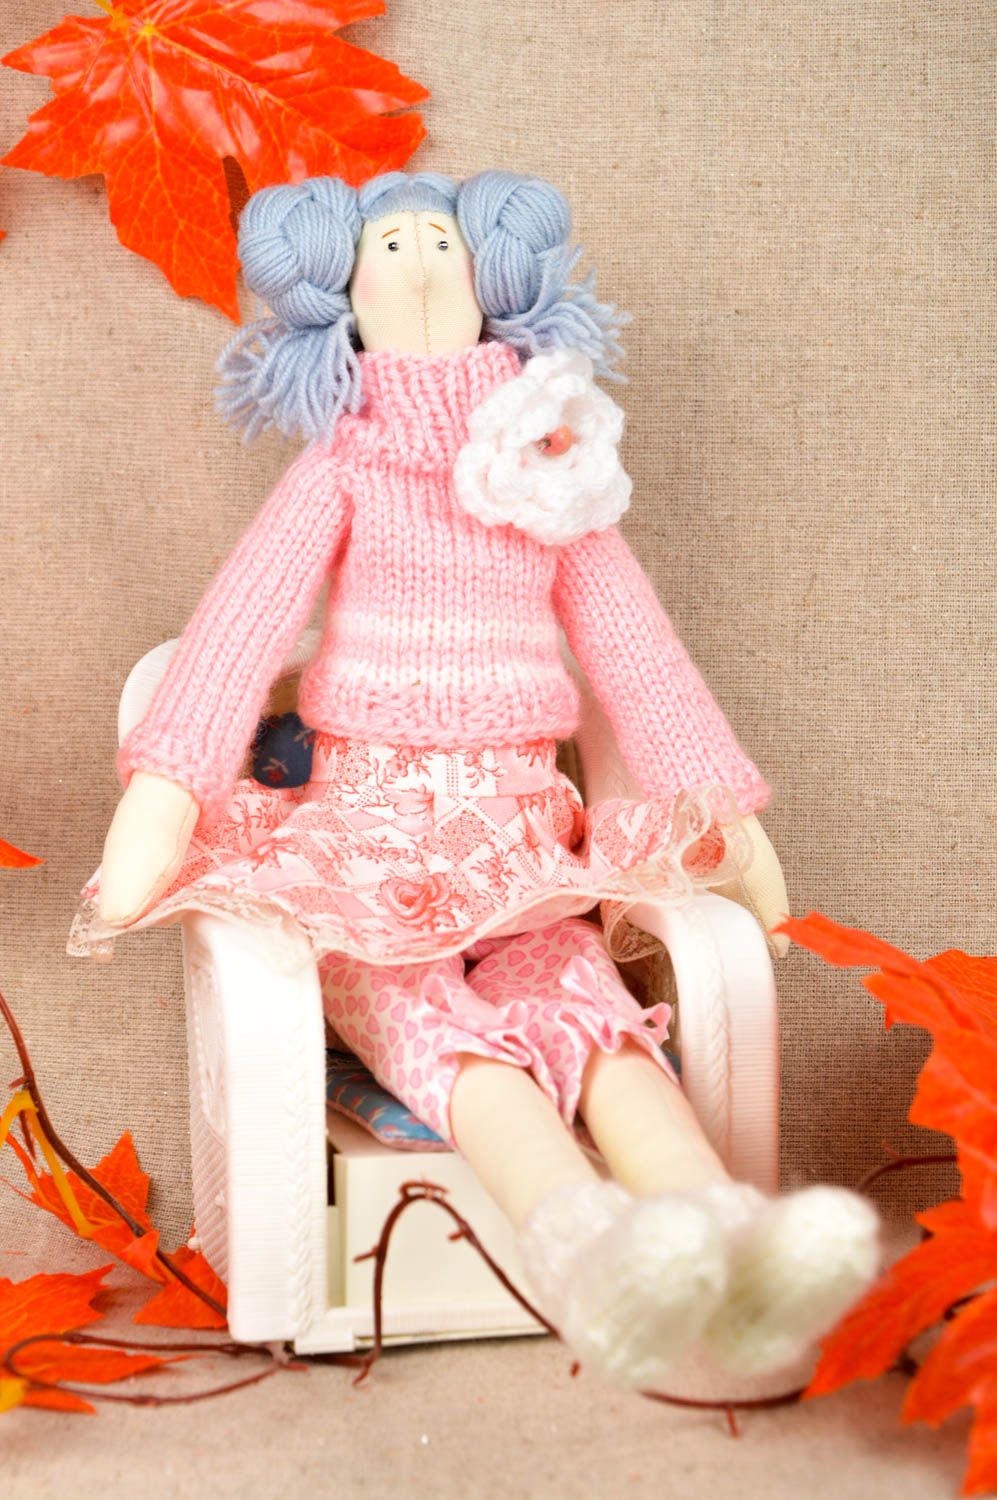 Rag doll handmade fabric toy textile toy for children nursery decor ideas photo 1